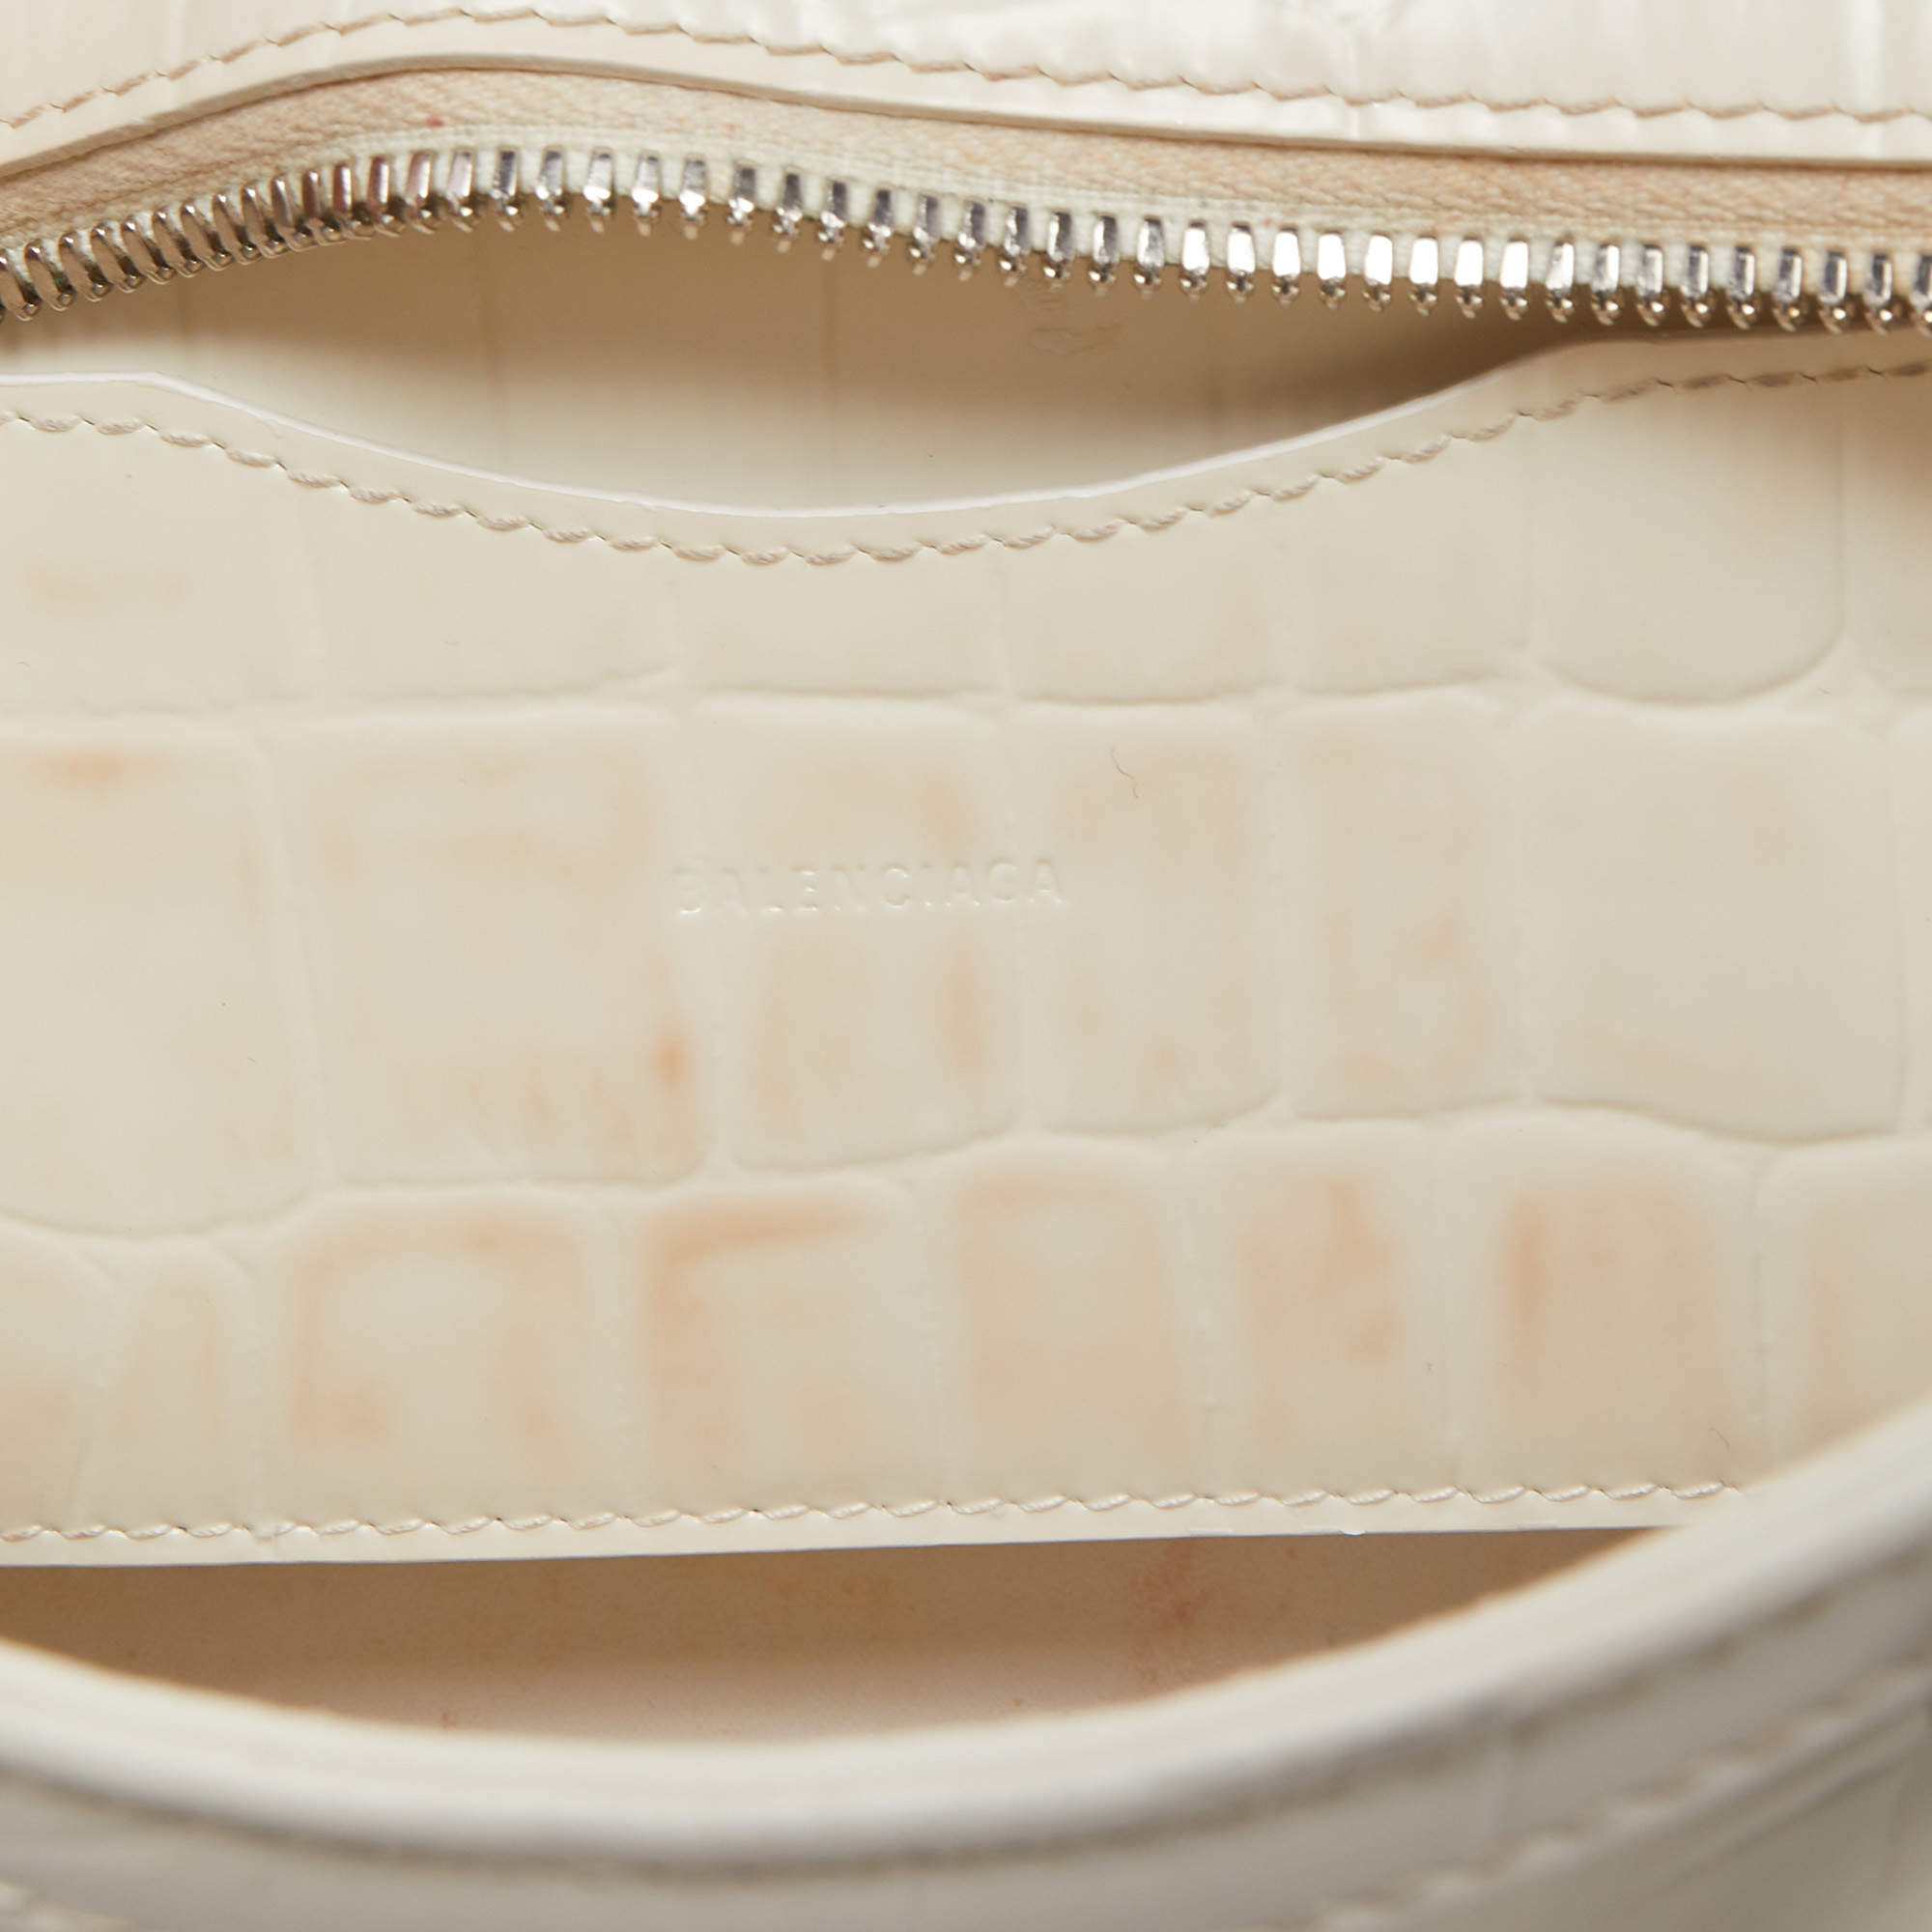 Carolina Herrera 80s Croc-Embossed Leather Shoulder Bag/ Vintage Carolina Herrera Cream Leather Bag